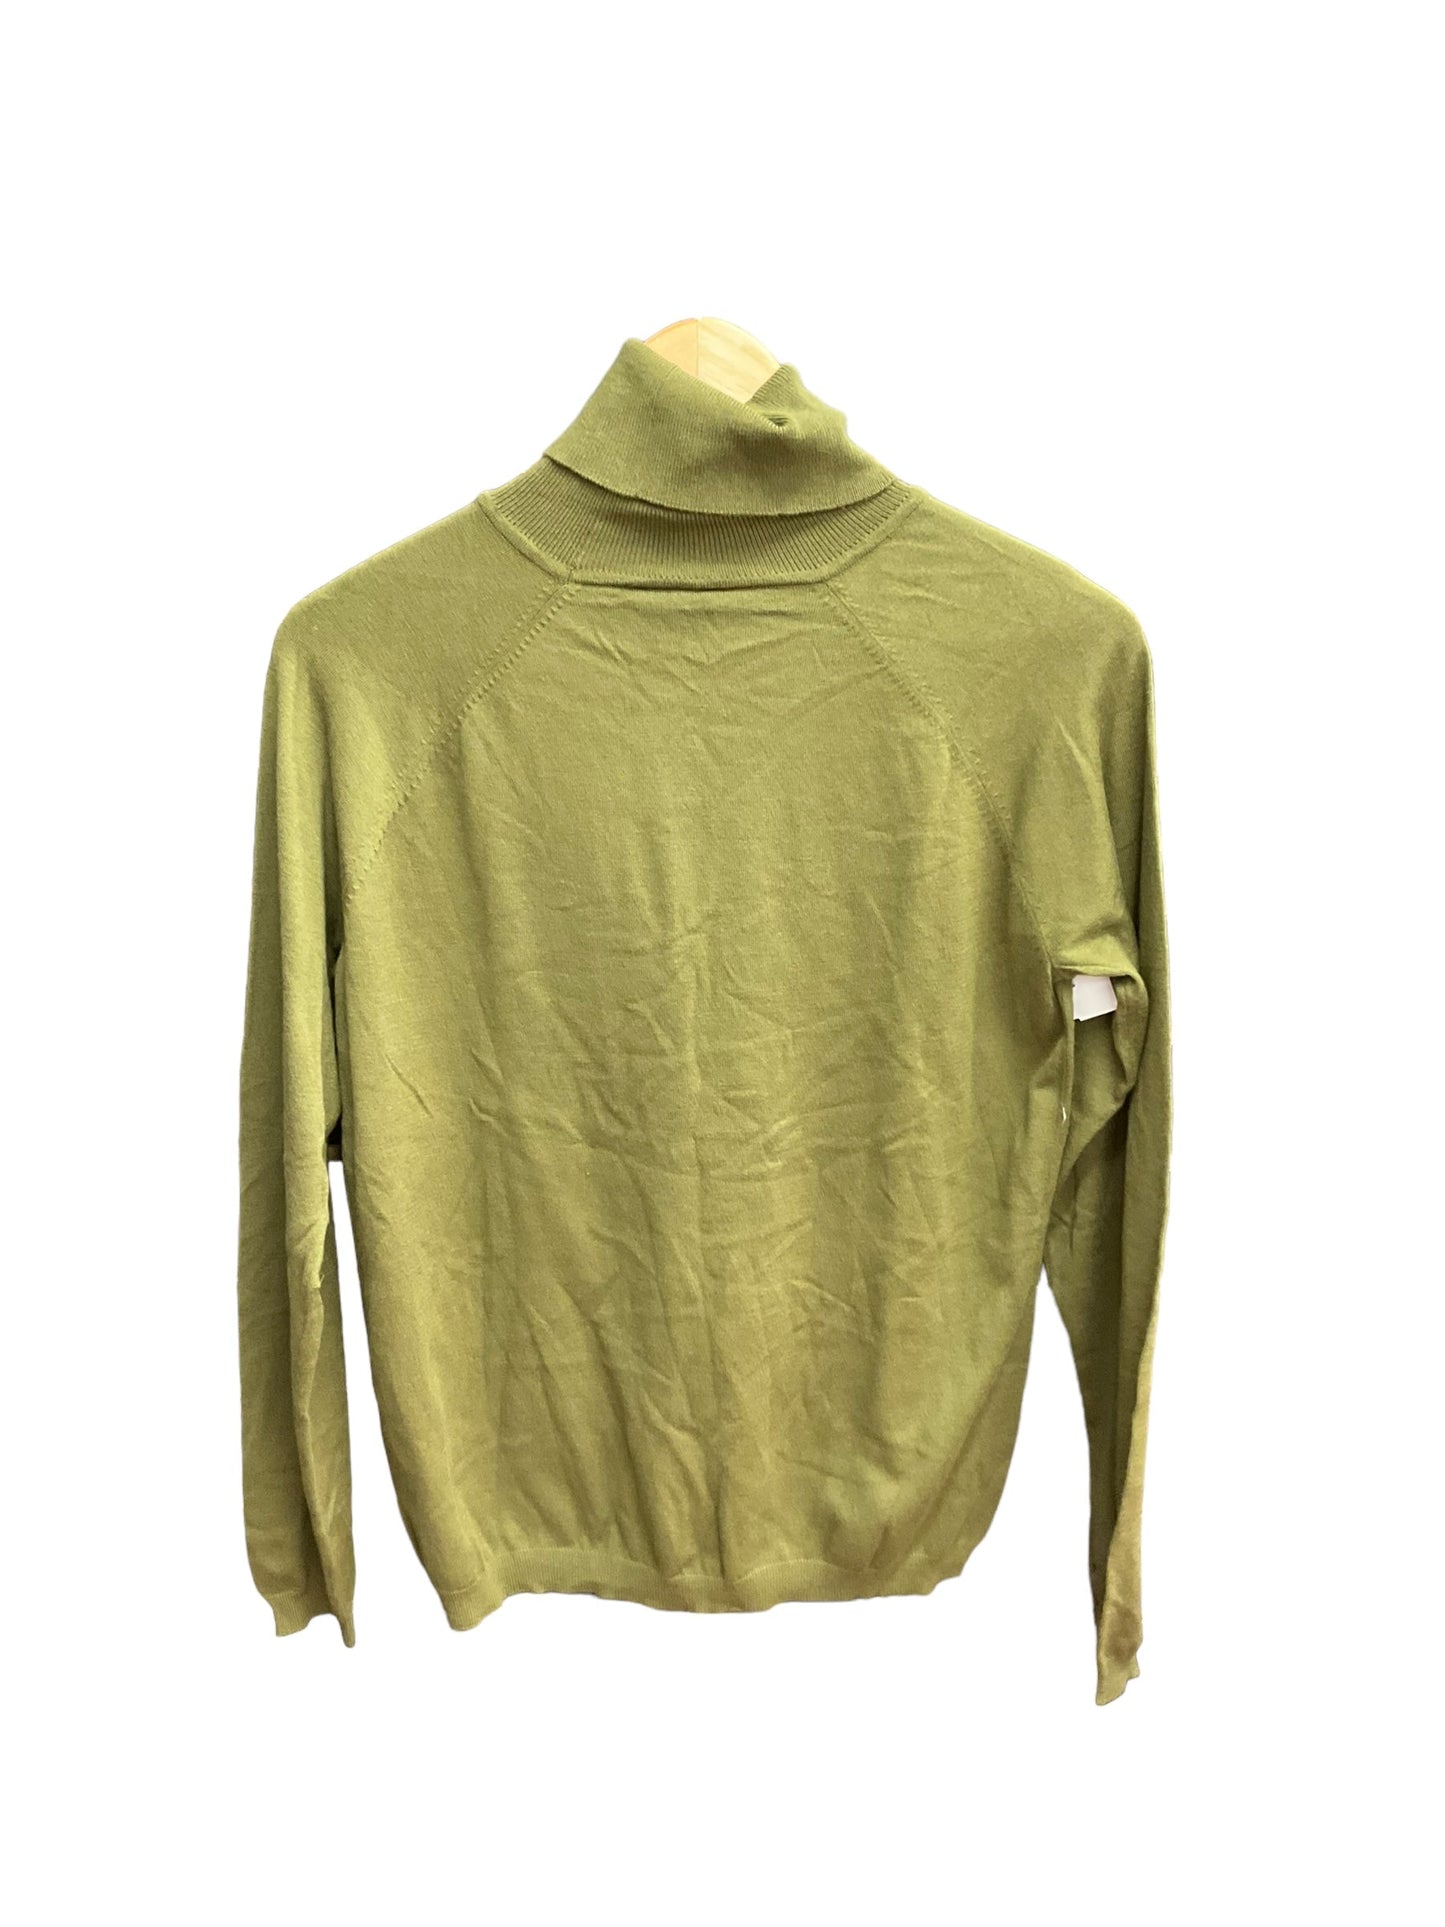 Green Top Long Sleeve Basic Talbots, Size L